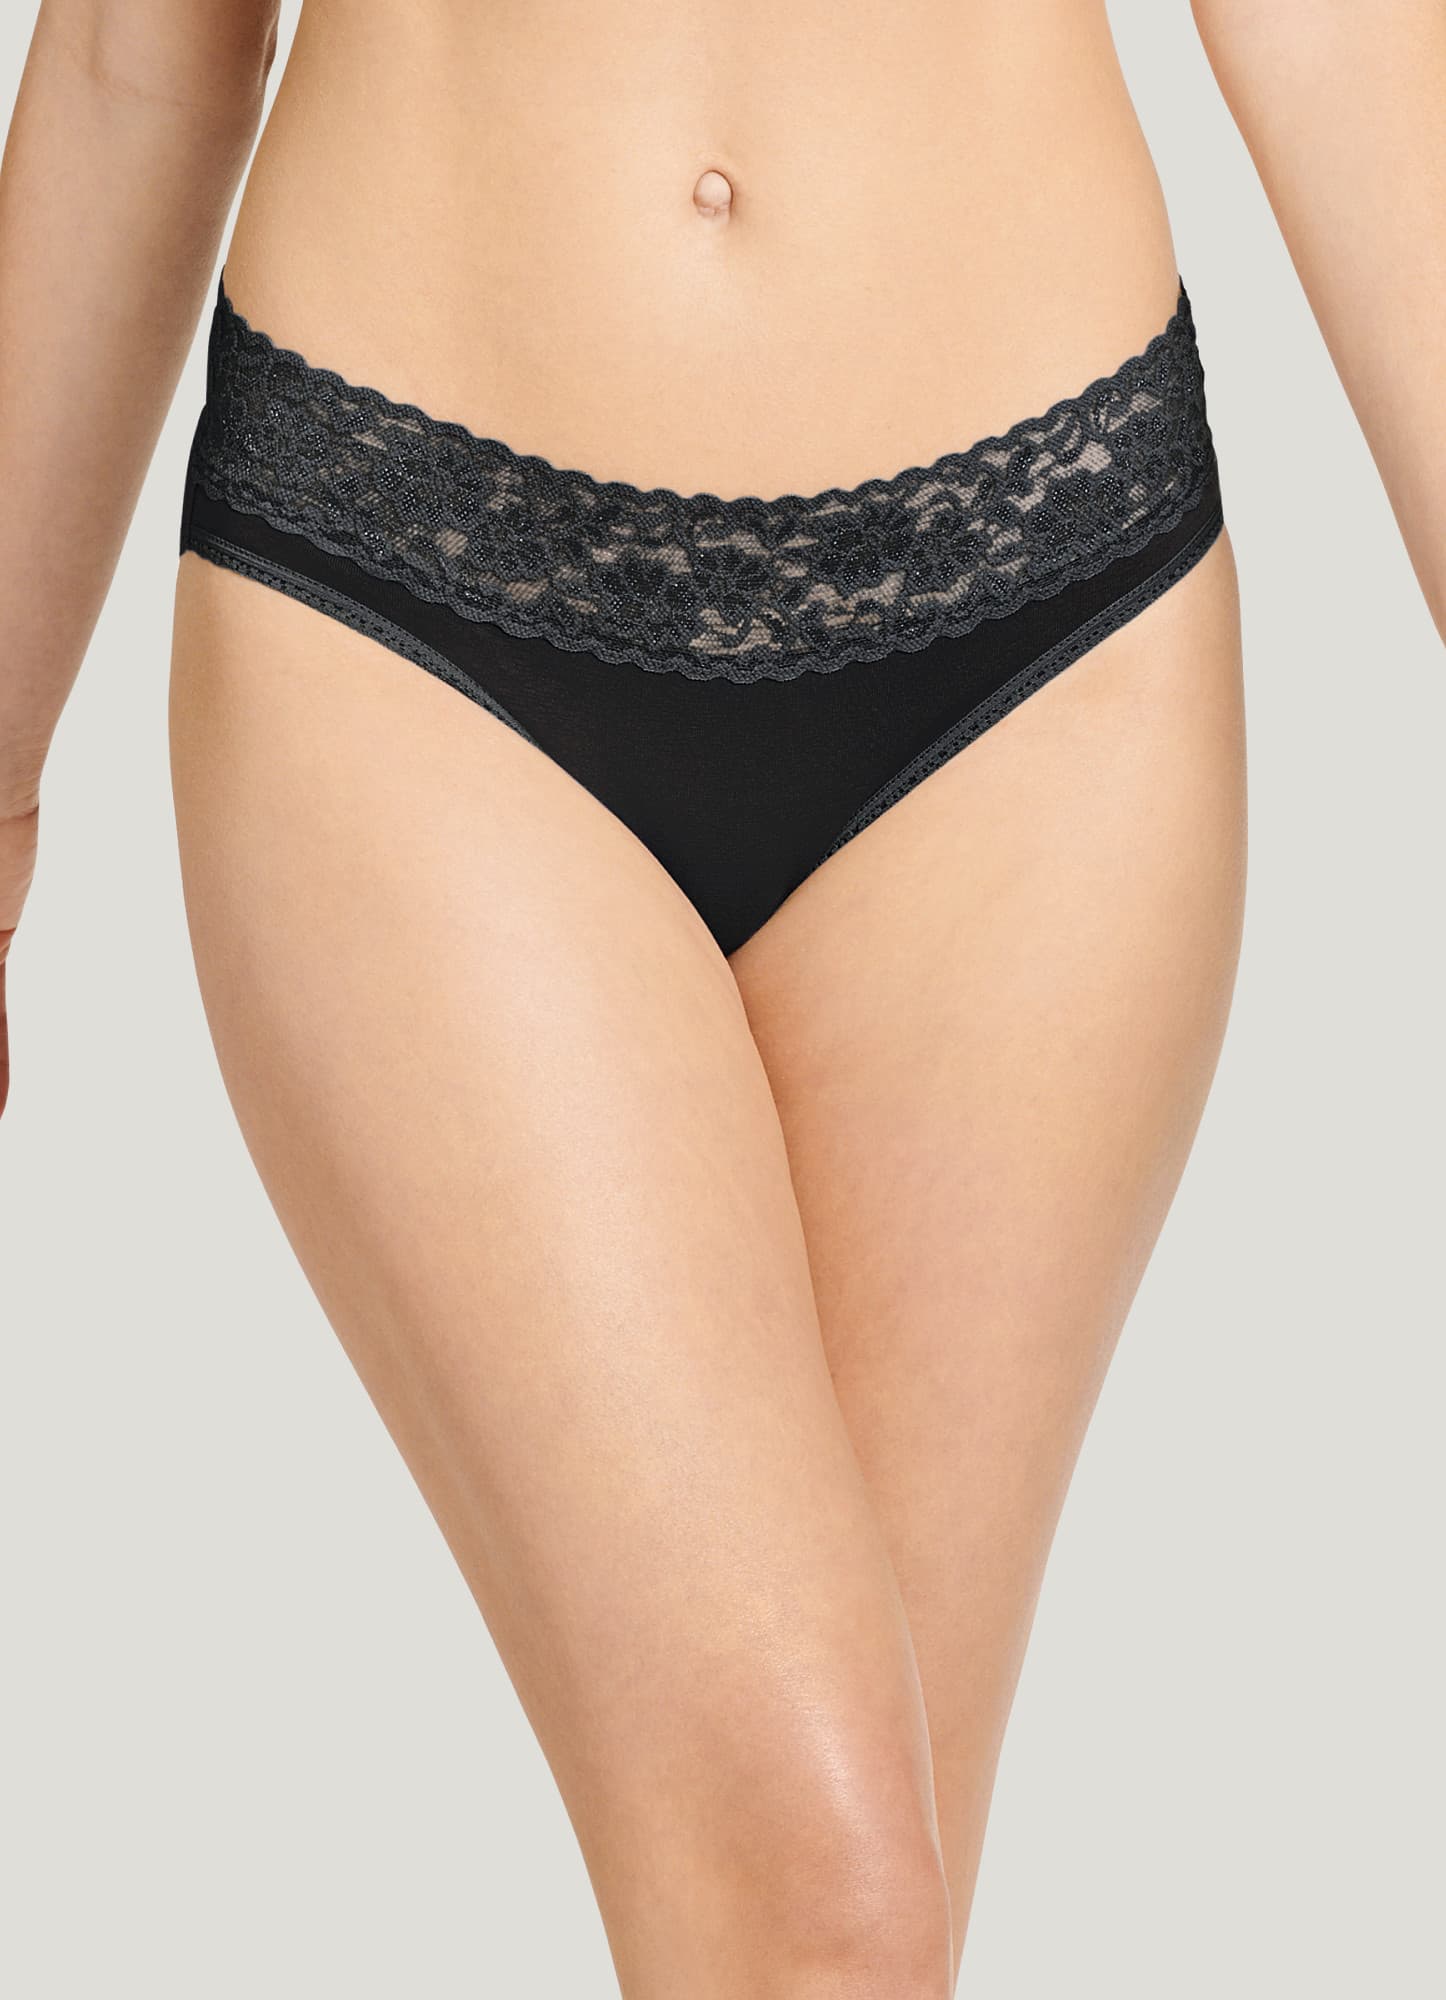 Buy Lace String Bikini Panty Online